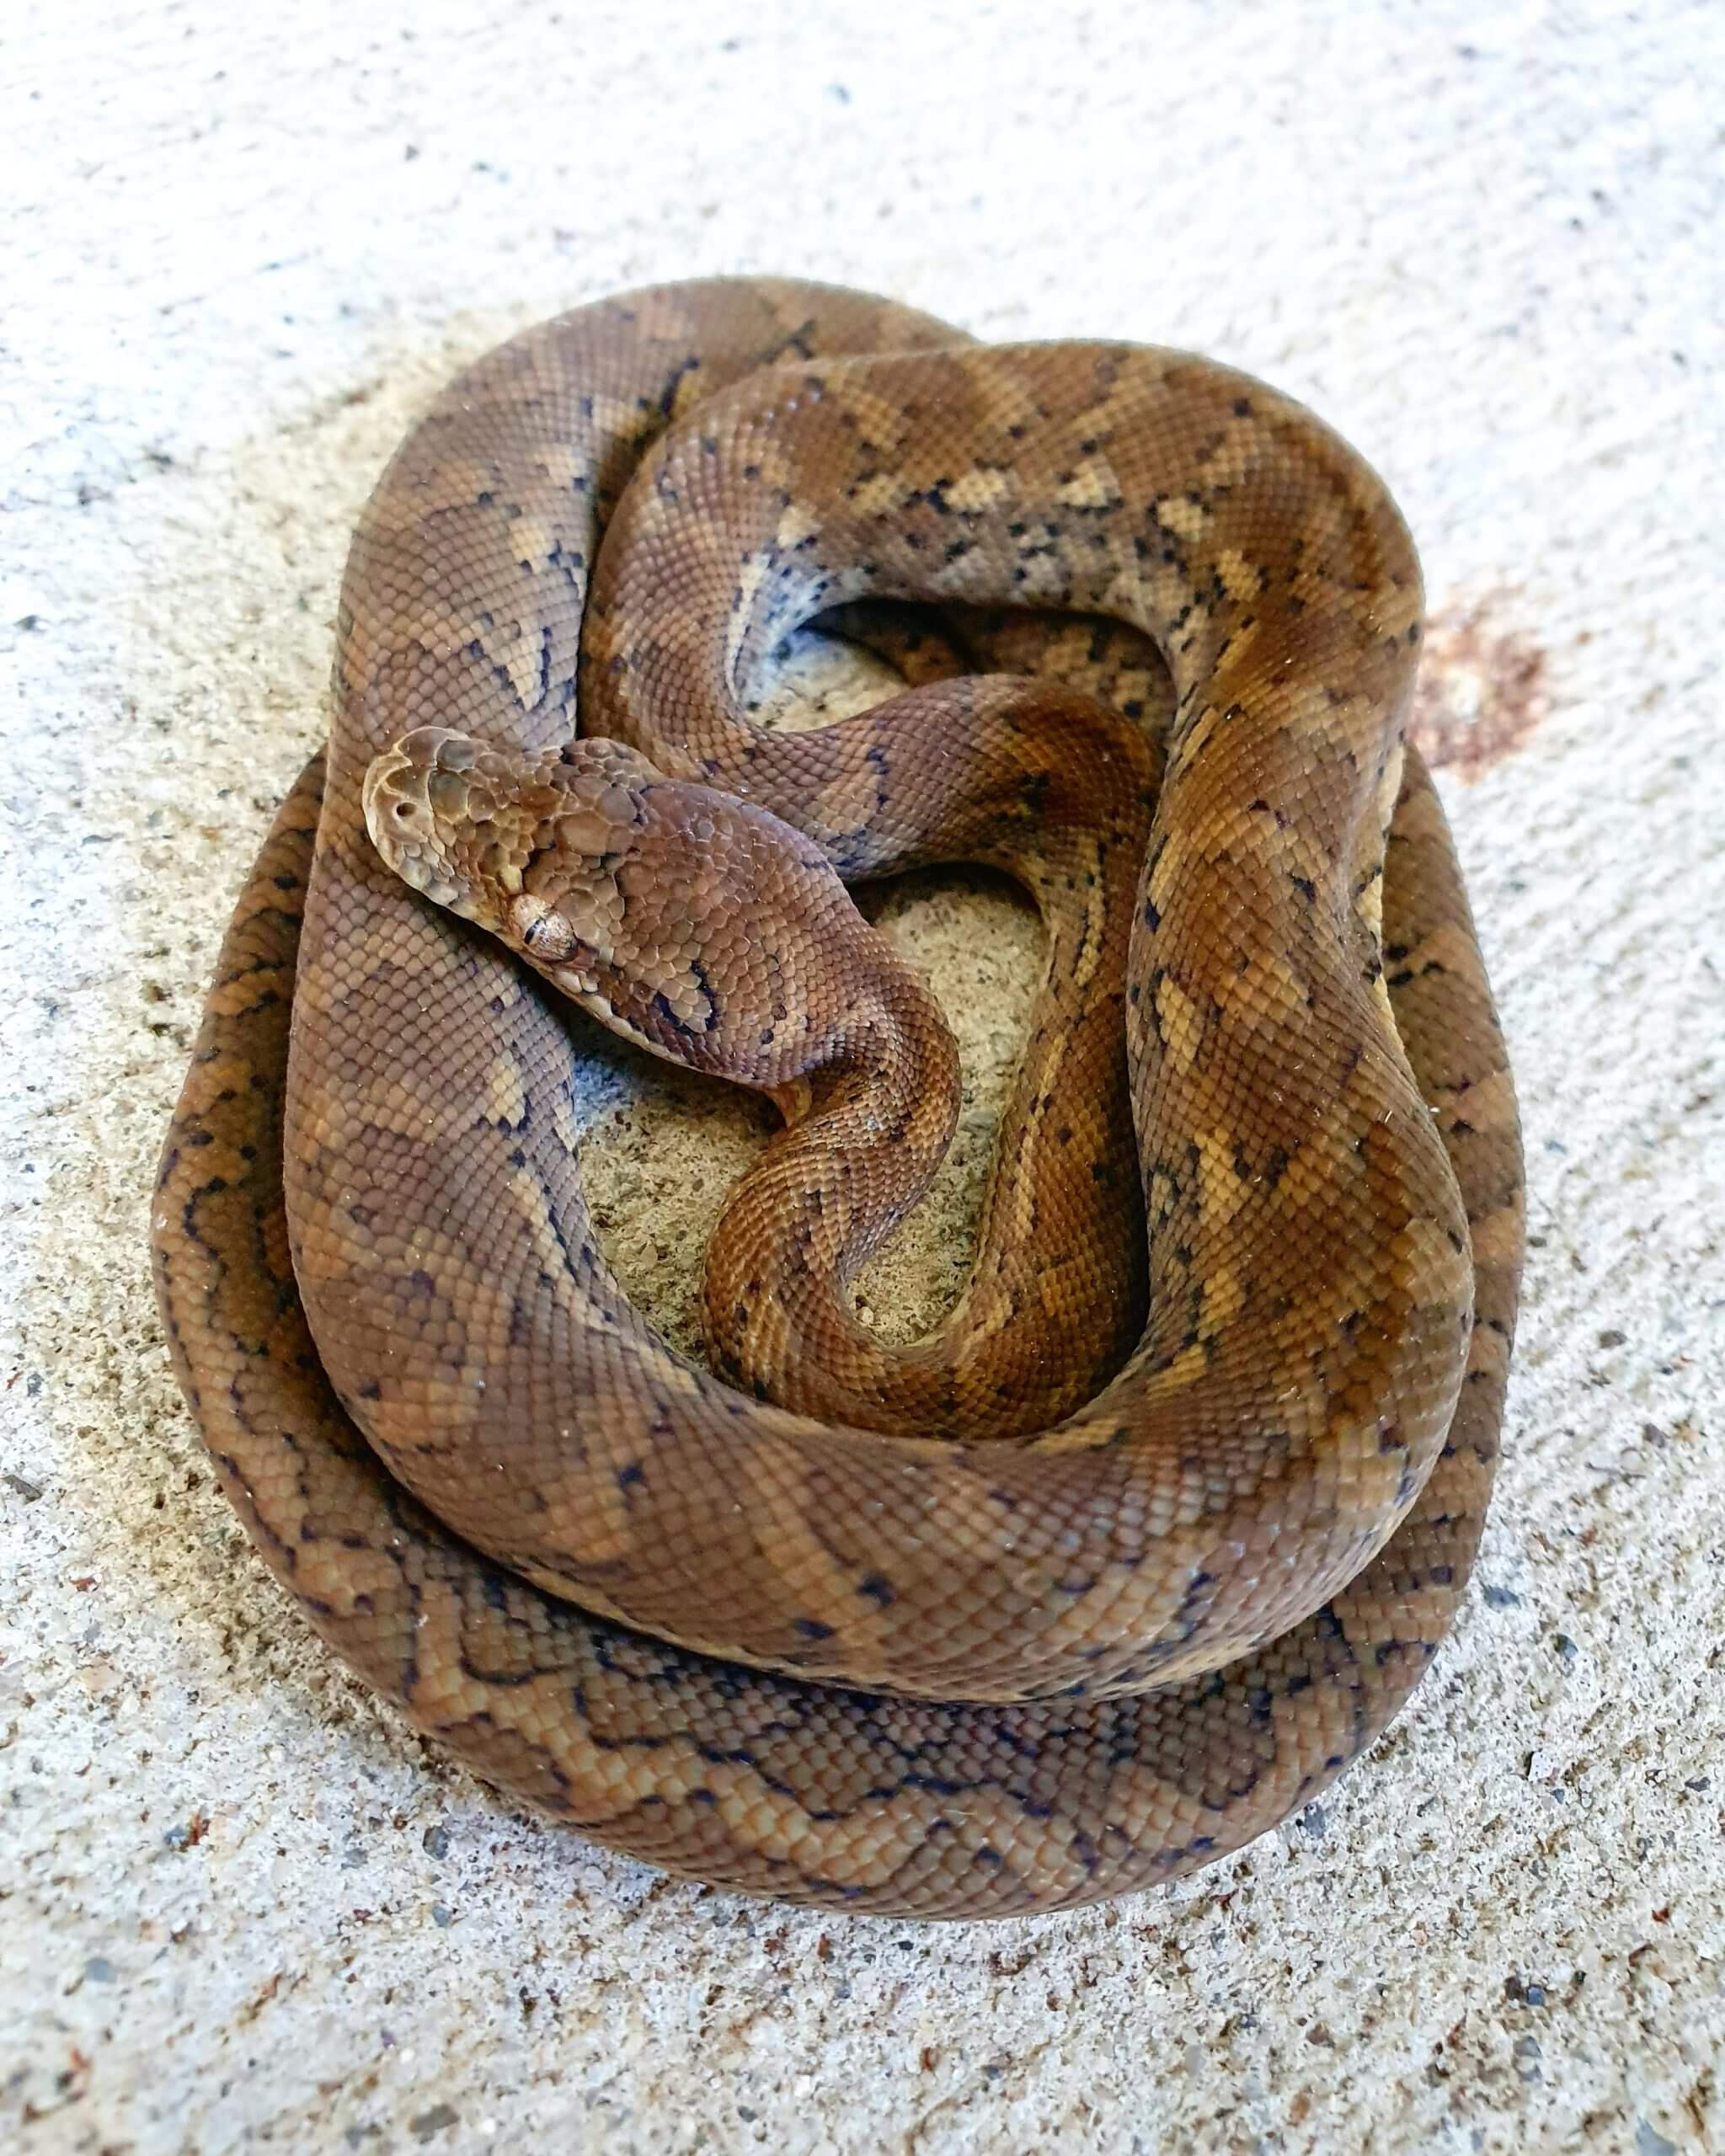 Coastal Carpet Python Curled Up